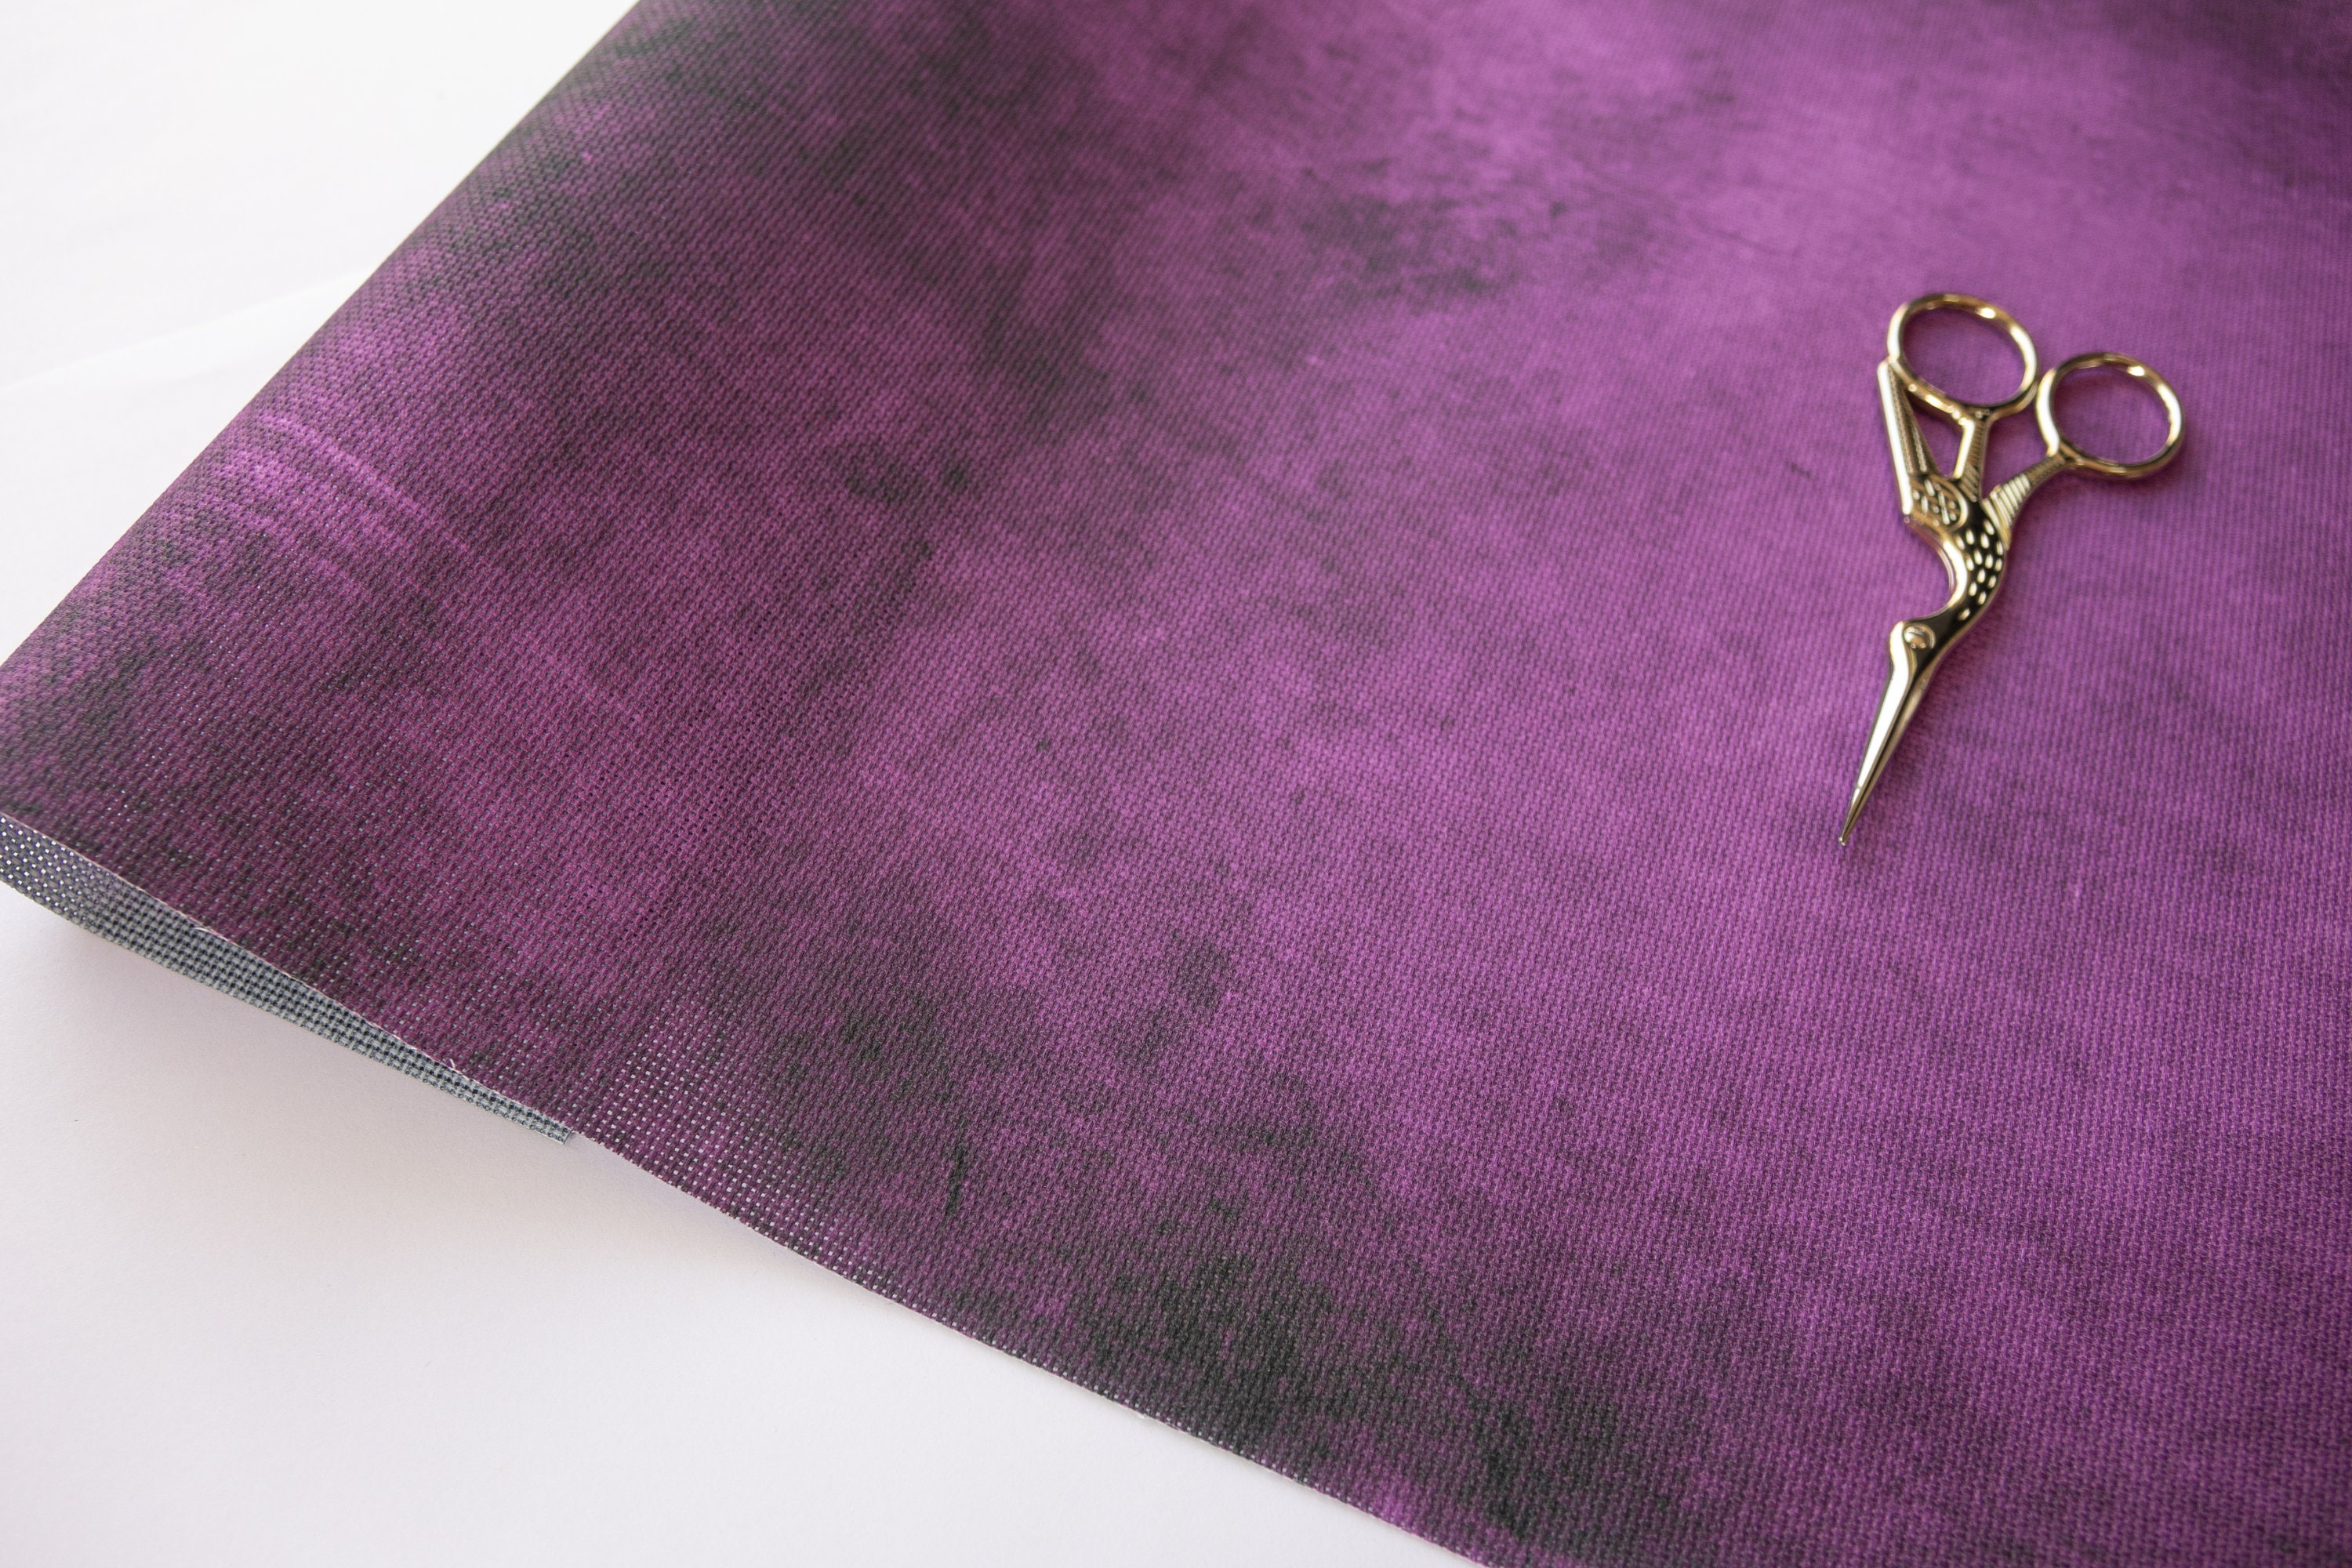 Aida Cross Stitch Fabric - Peaceful Purple (14 ct) – Snuggly Monkey